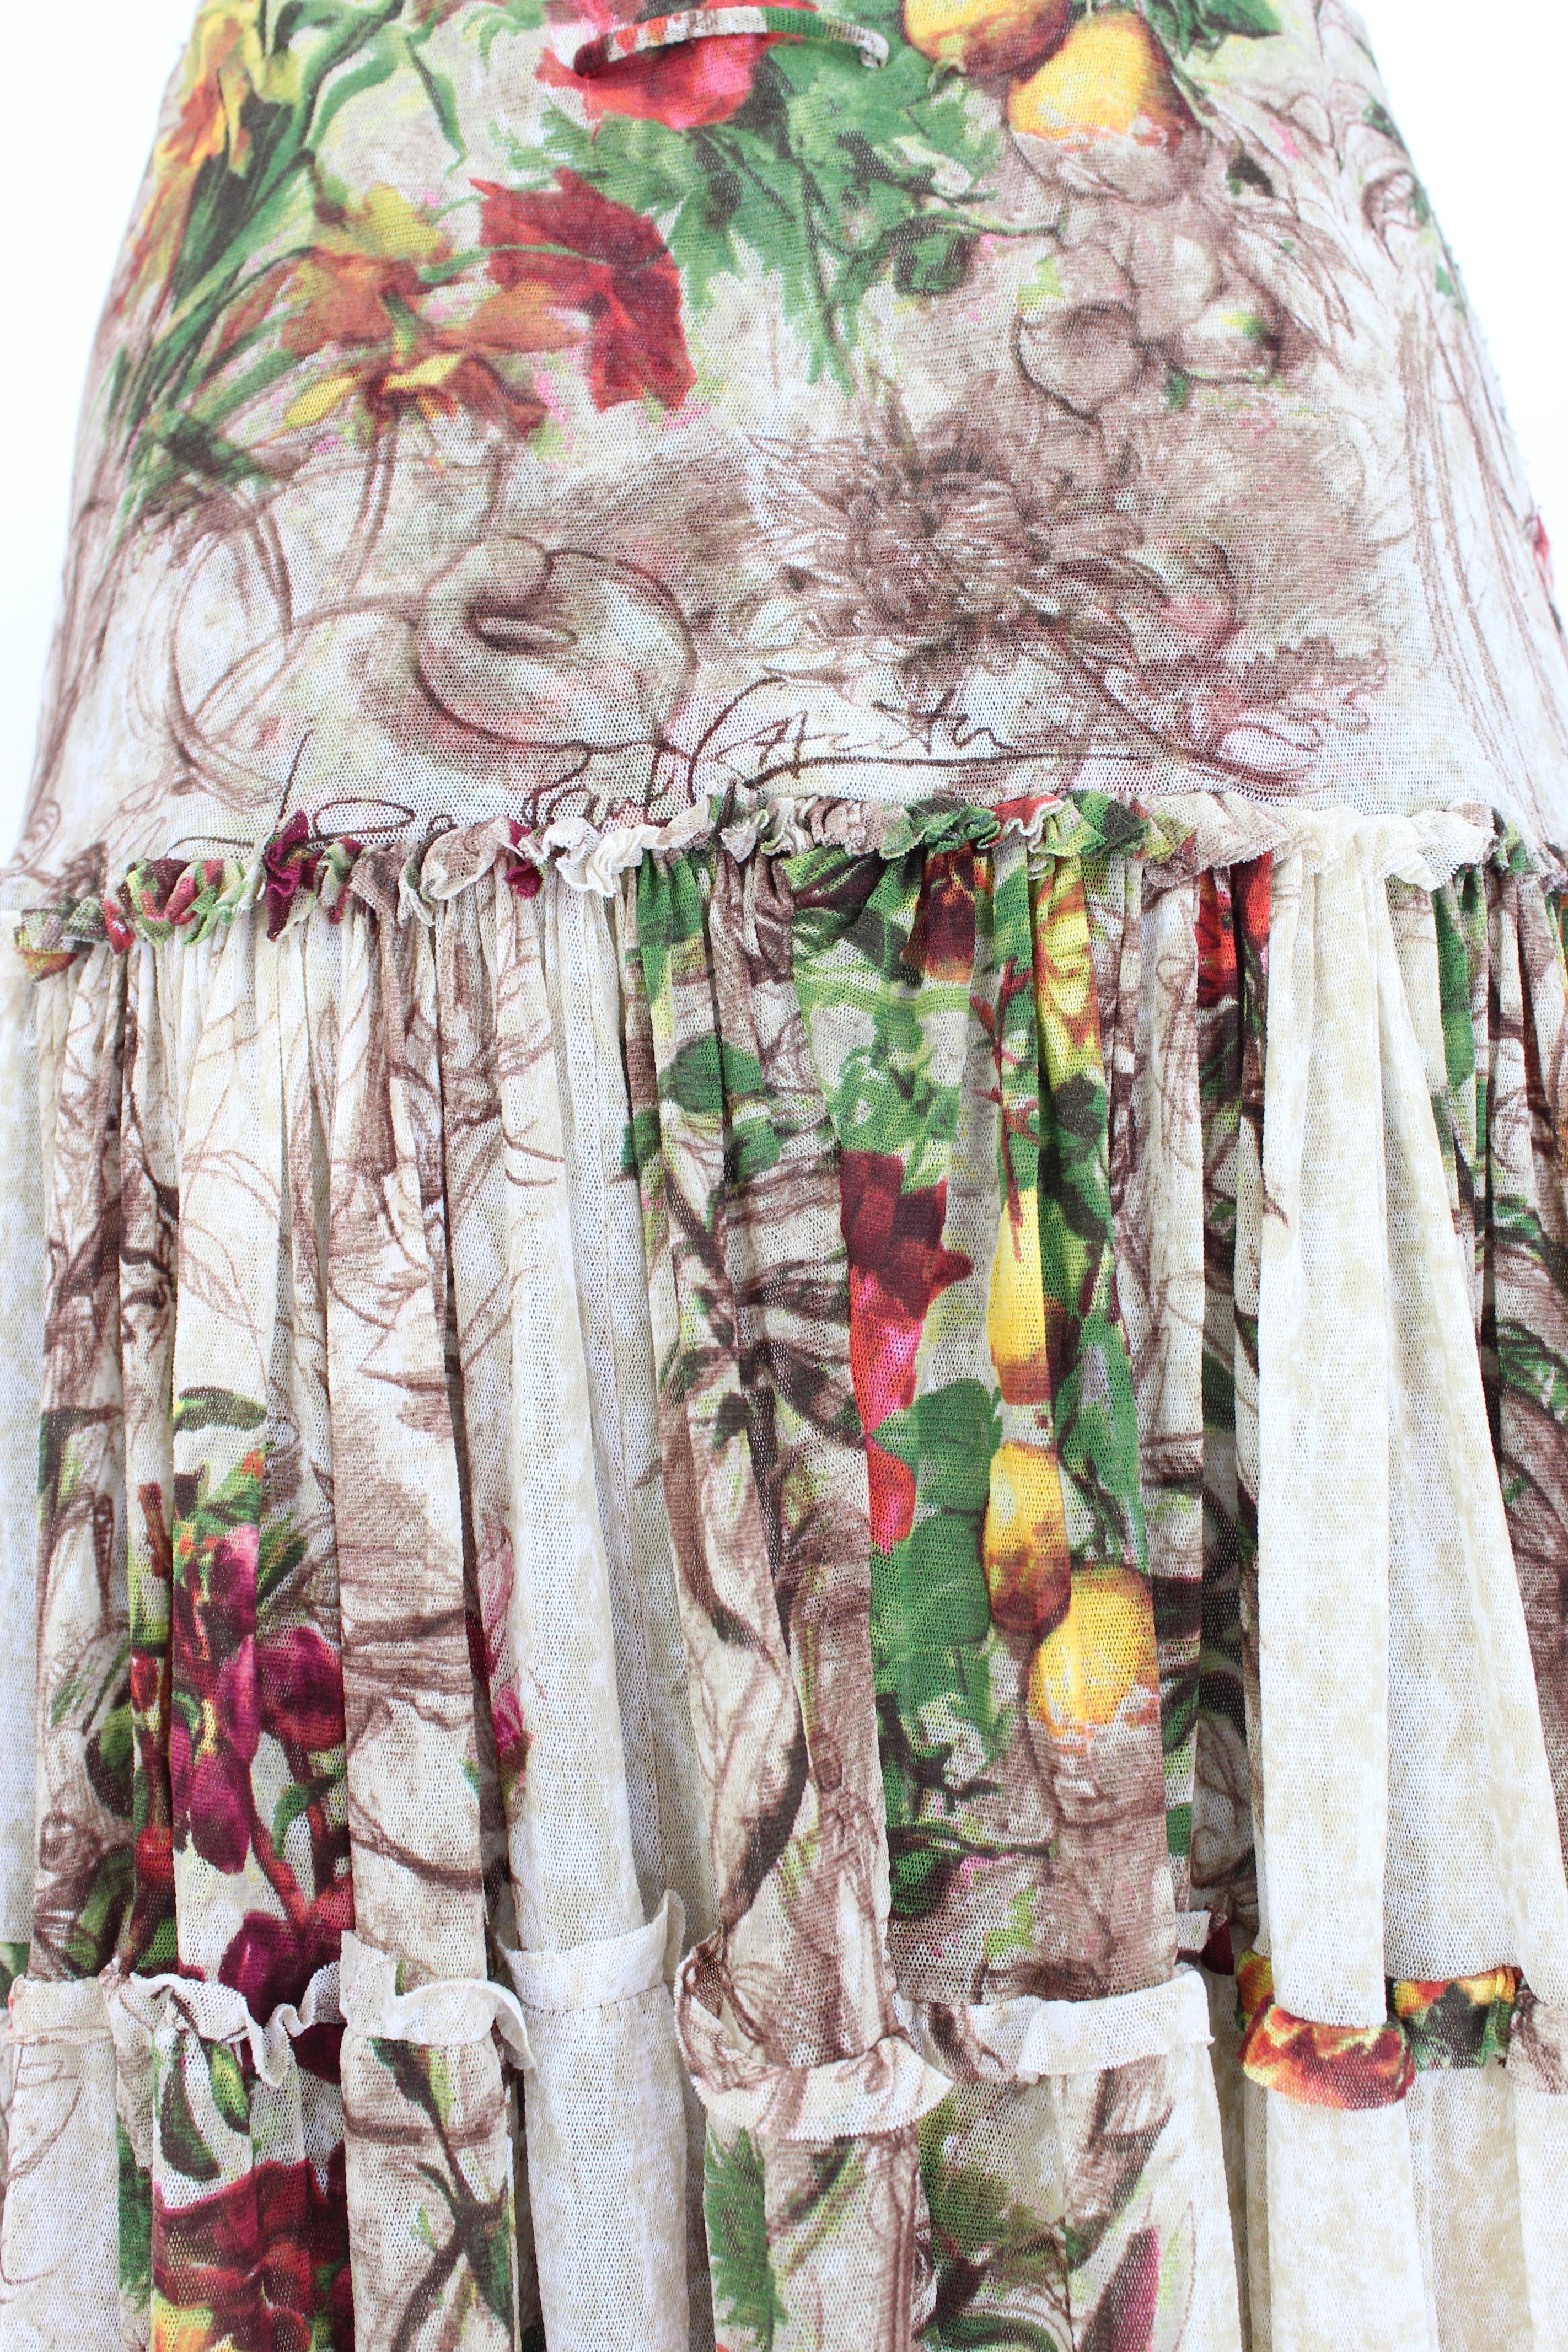 mesh floral skirt